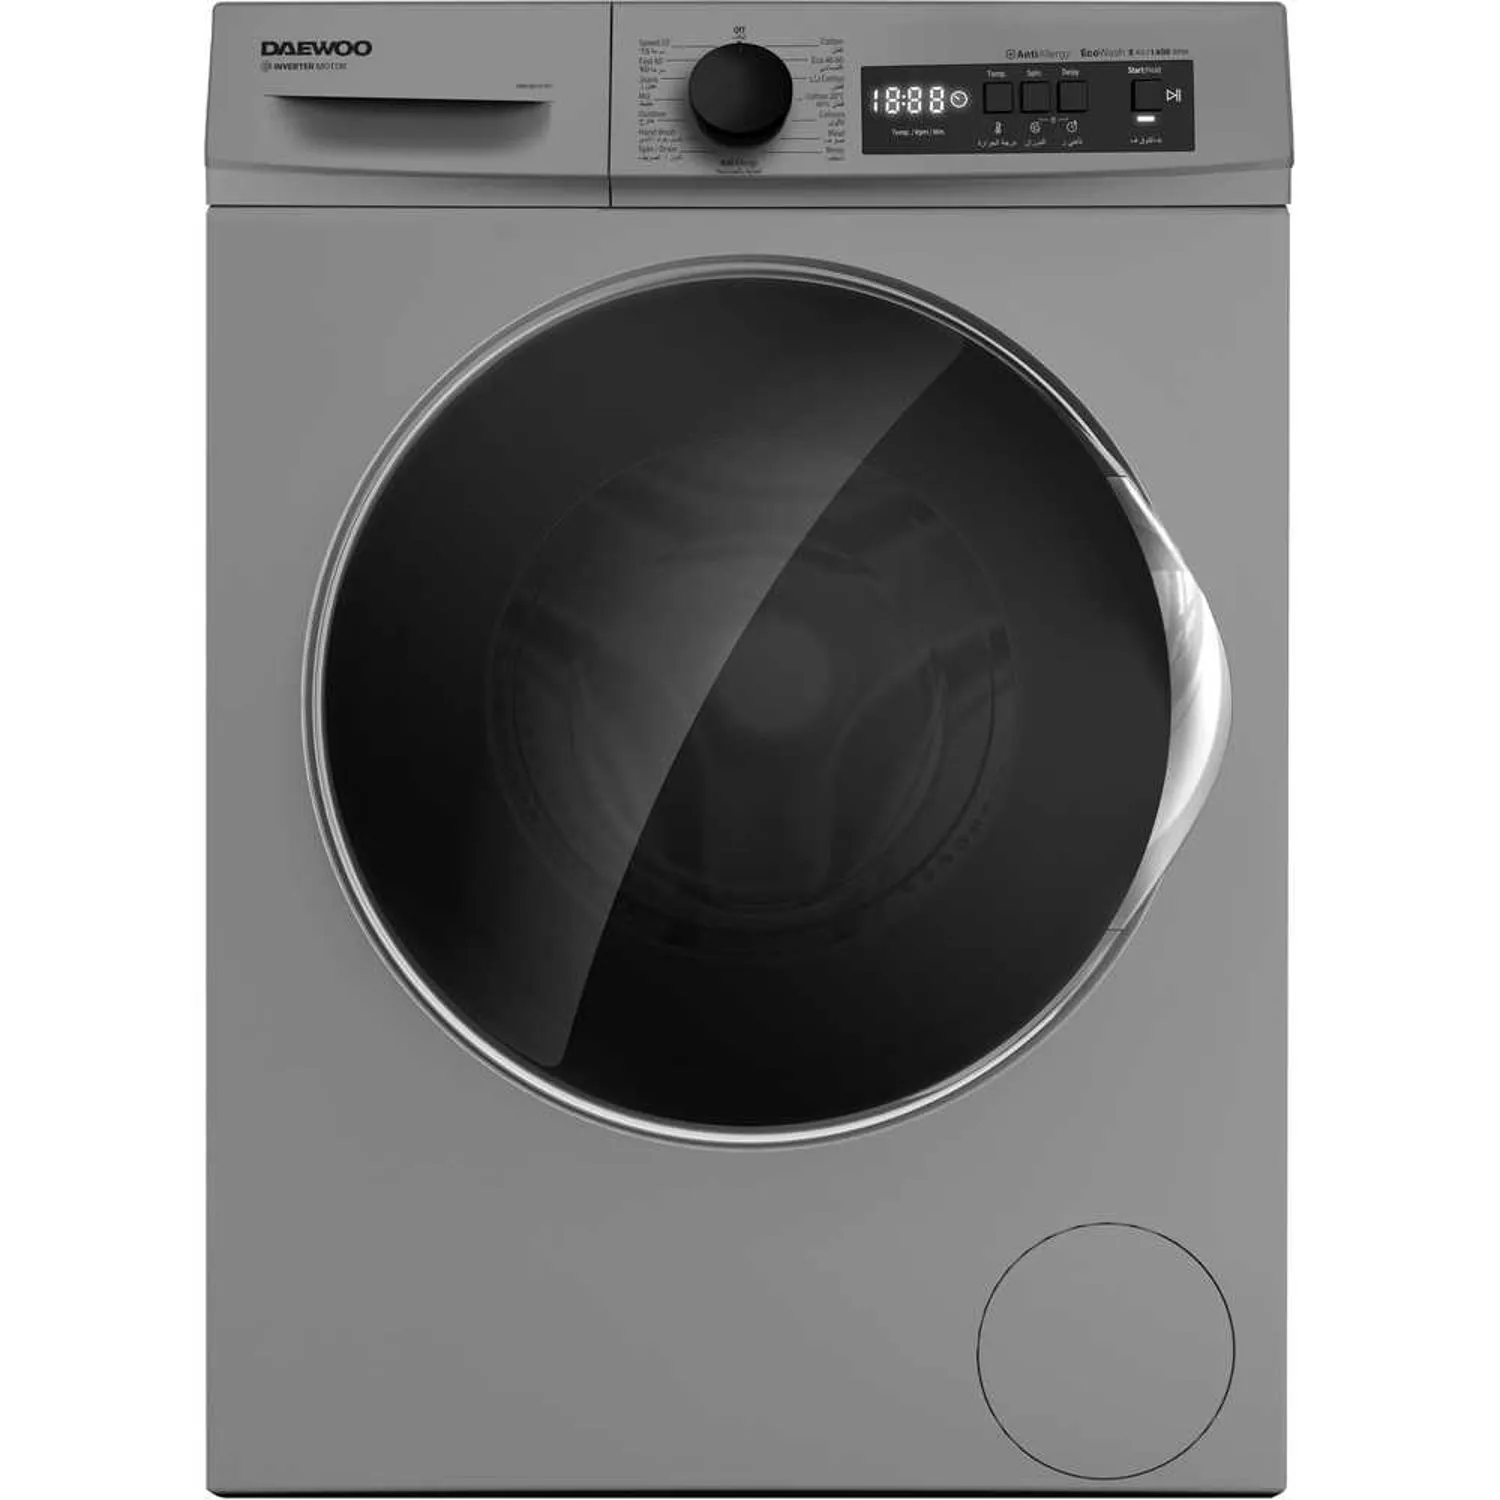 Daewoo 8 Kg Front Loading Washing Machine 1400 RPM Color Dark Silver Model- DWD-8S1413IT – 1 Year Full Warranty.